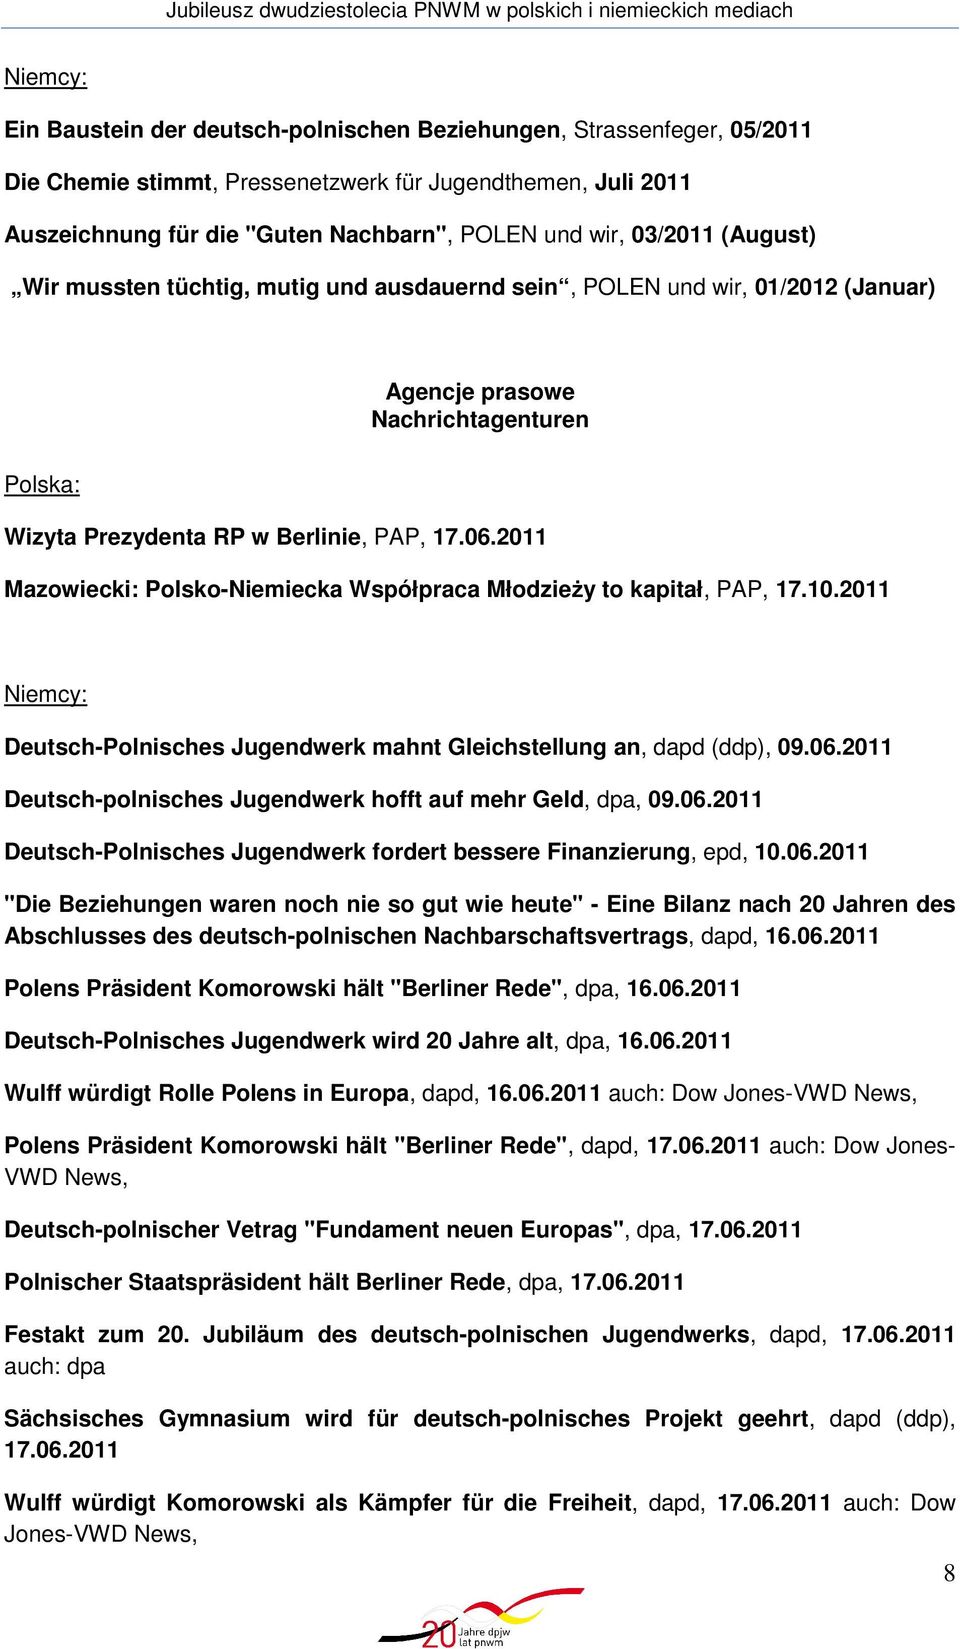 2011 Mazowiecki: Polsko-Niemiecka Współpraca MłodzieŜy to kapitał, PAP, 17.10.2011 Niemcy: Deutsch-Polnisches Jugendwerk mahnt Gleichstellung an, dapd (ddp), 09.06.